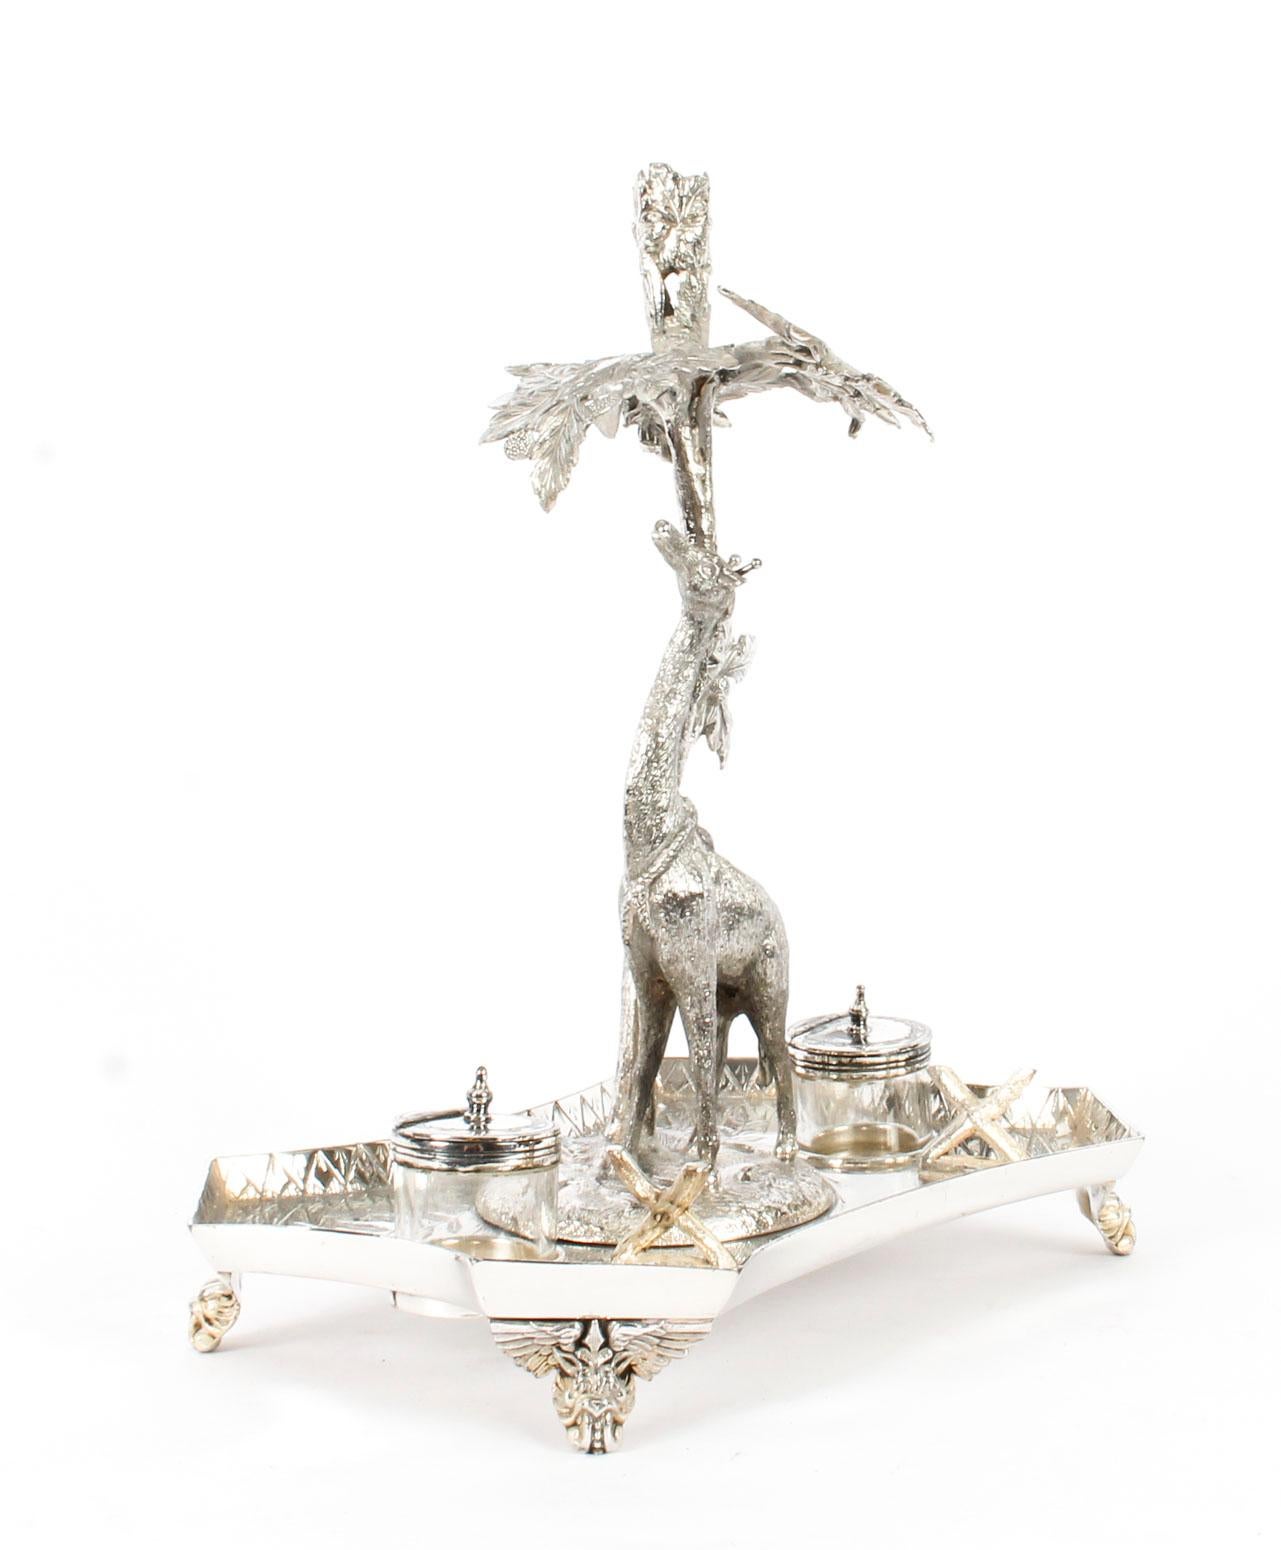 19th Century English Silver Plated Giraffe Desk Set James Deakin & Sons 11